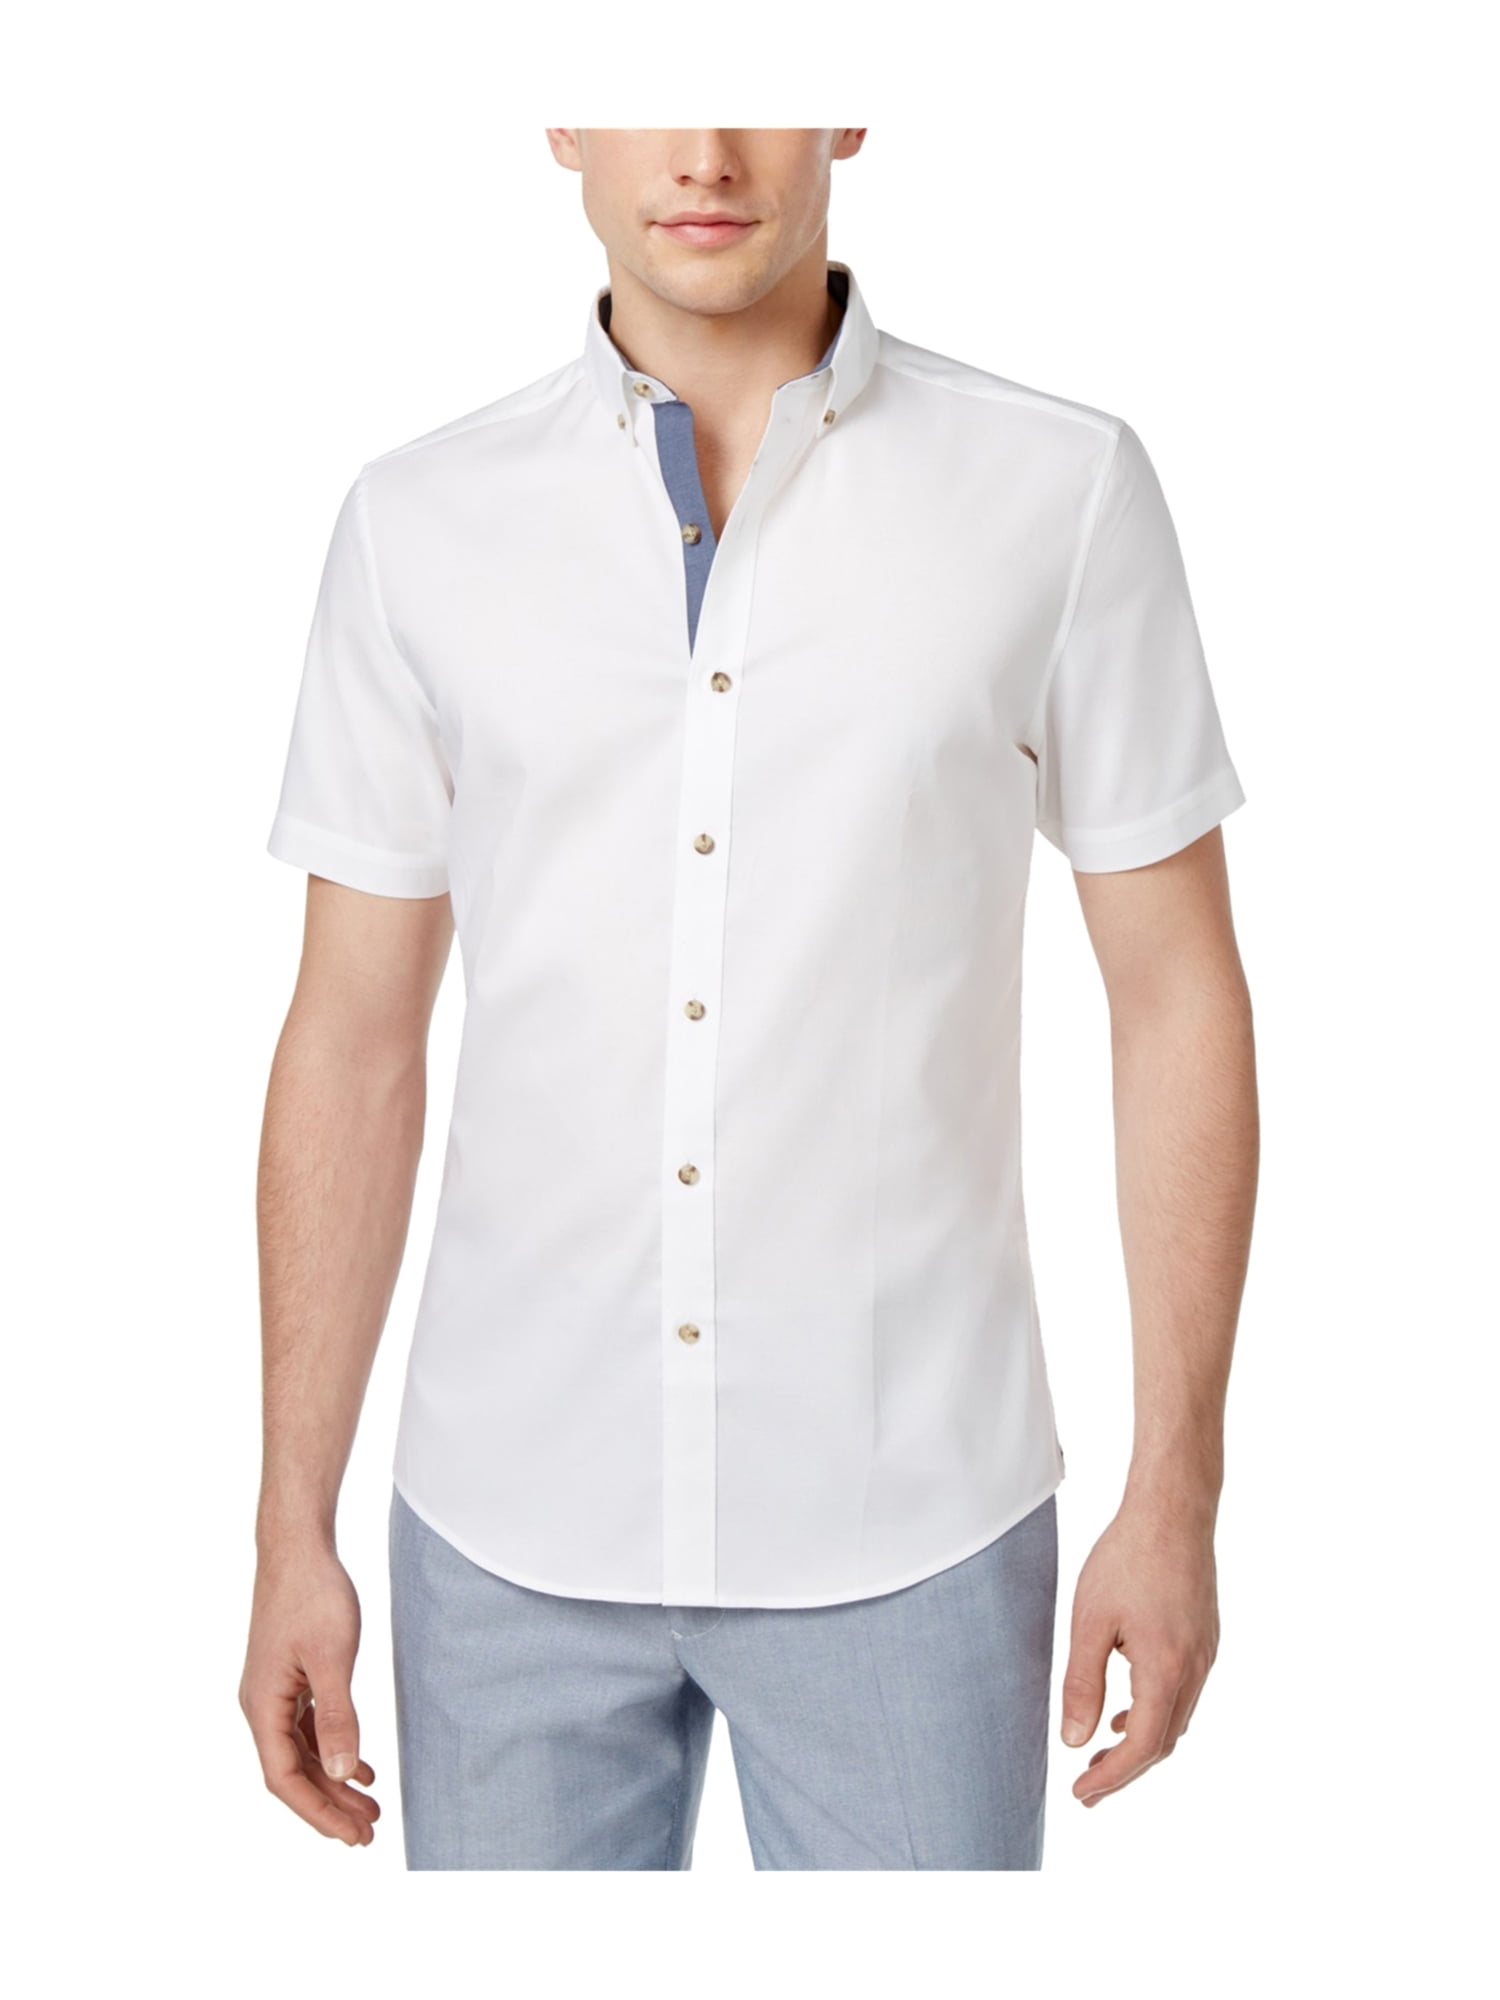 bar III Mens Oxford Button Up Dress Shirt white 17-17 1/2 | Walmart Canada